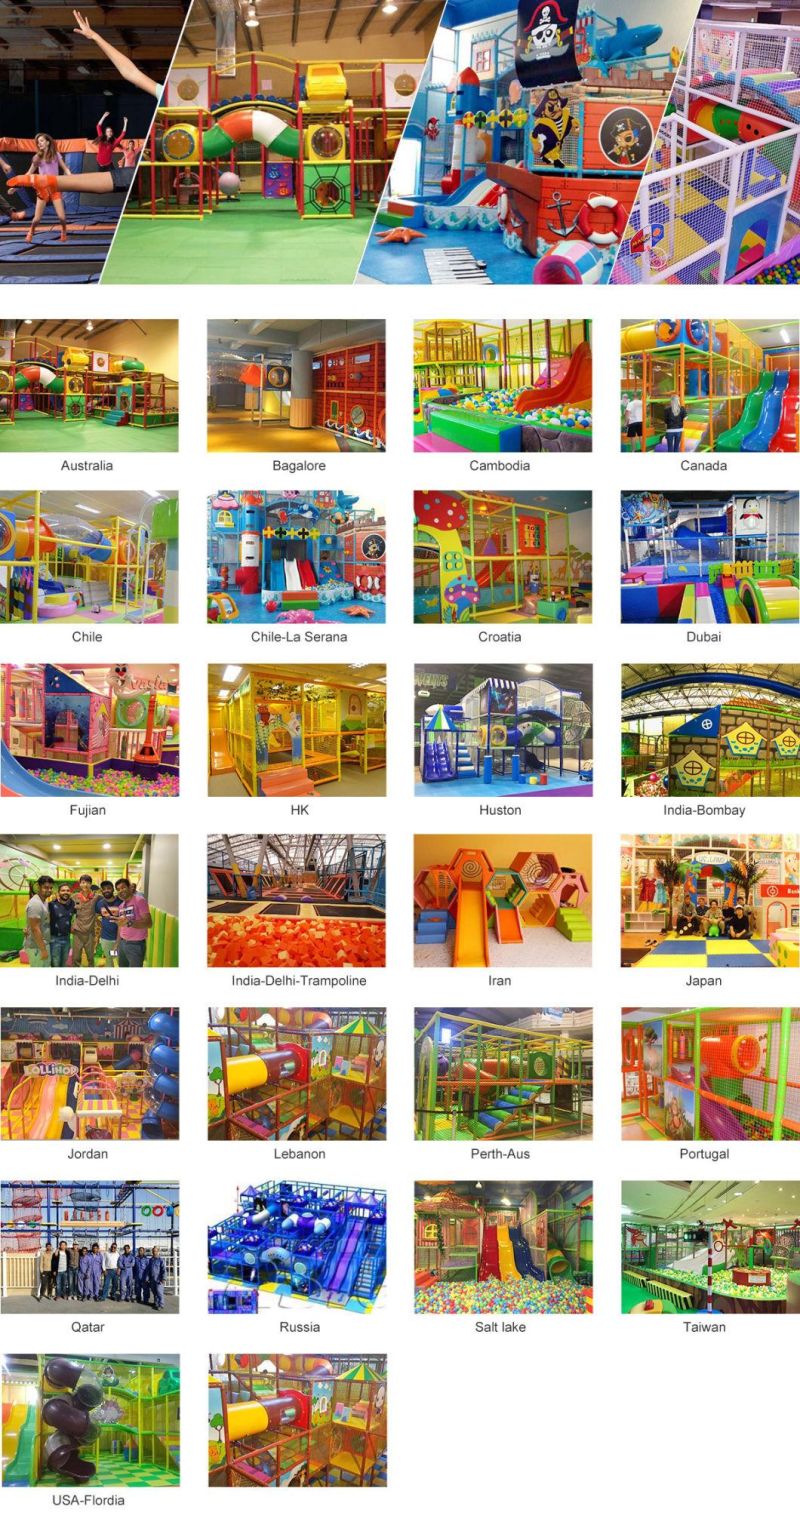 Hot Selling Kids Plastic Indoor Playground Equipment for Children